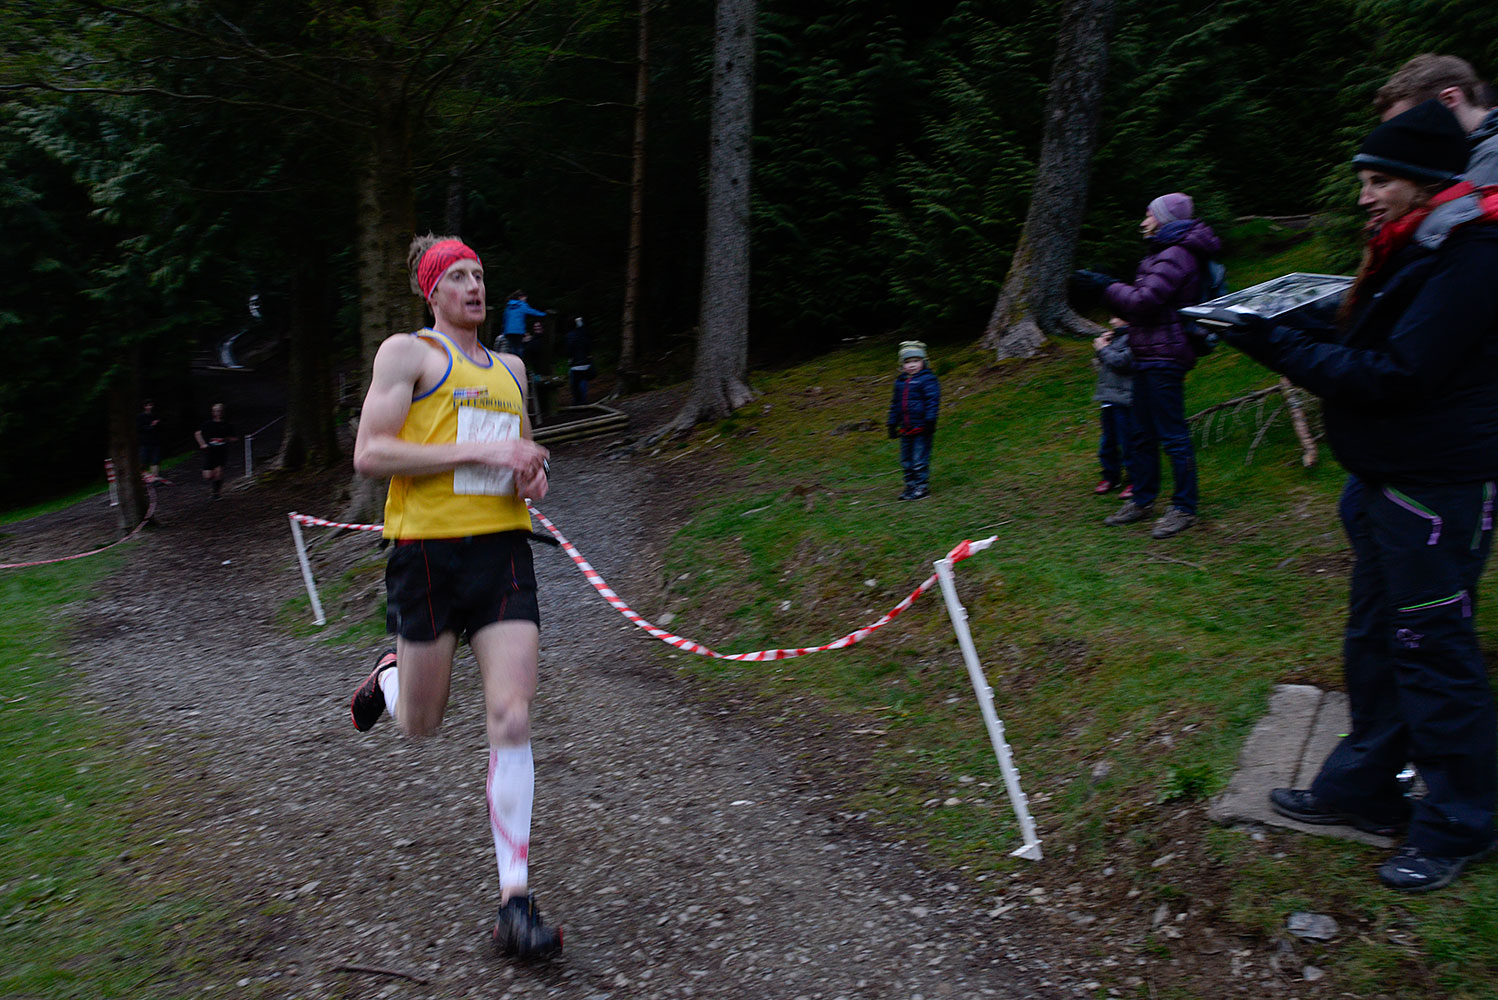 An 8km / 5 mile fell race in Whinlatter Forest Park above Braithwaite, Keswick, Cumbria. Ricky Lightfoot winning the mens' race.